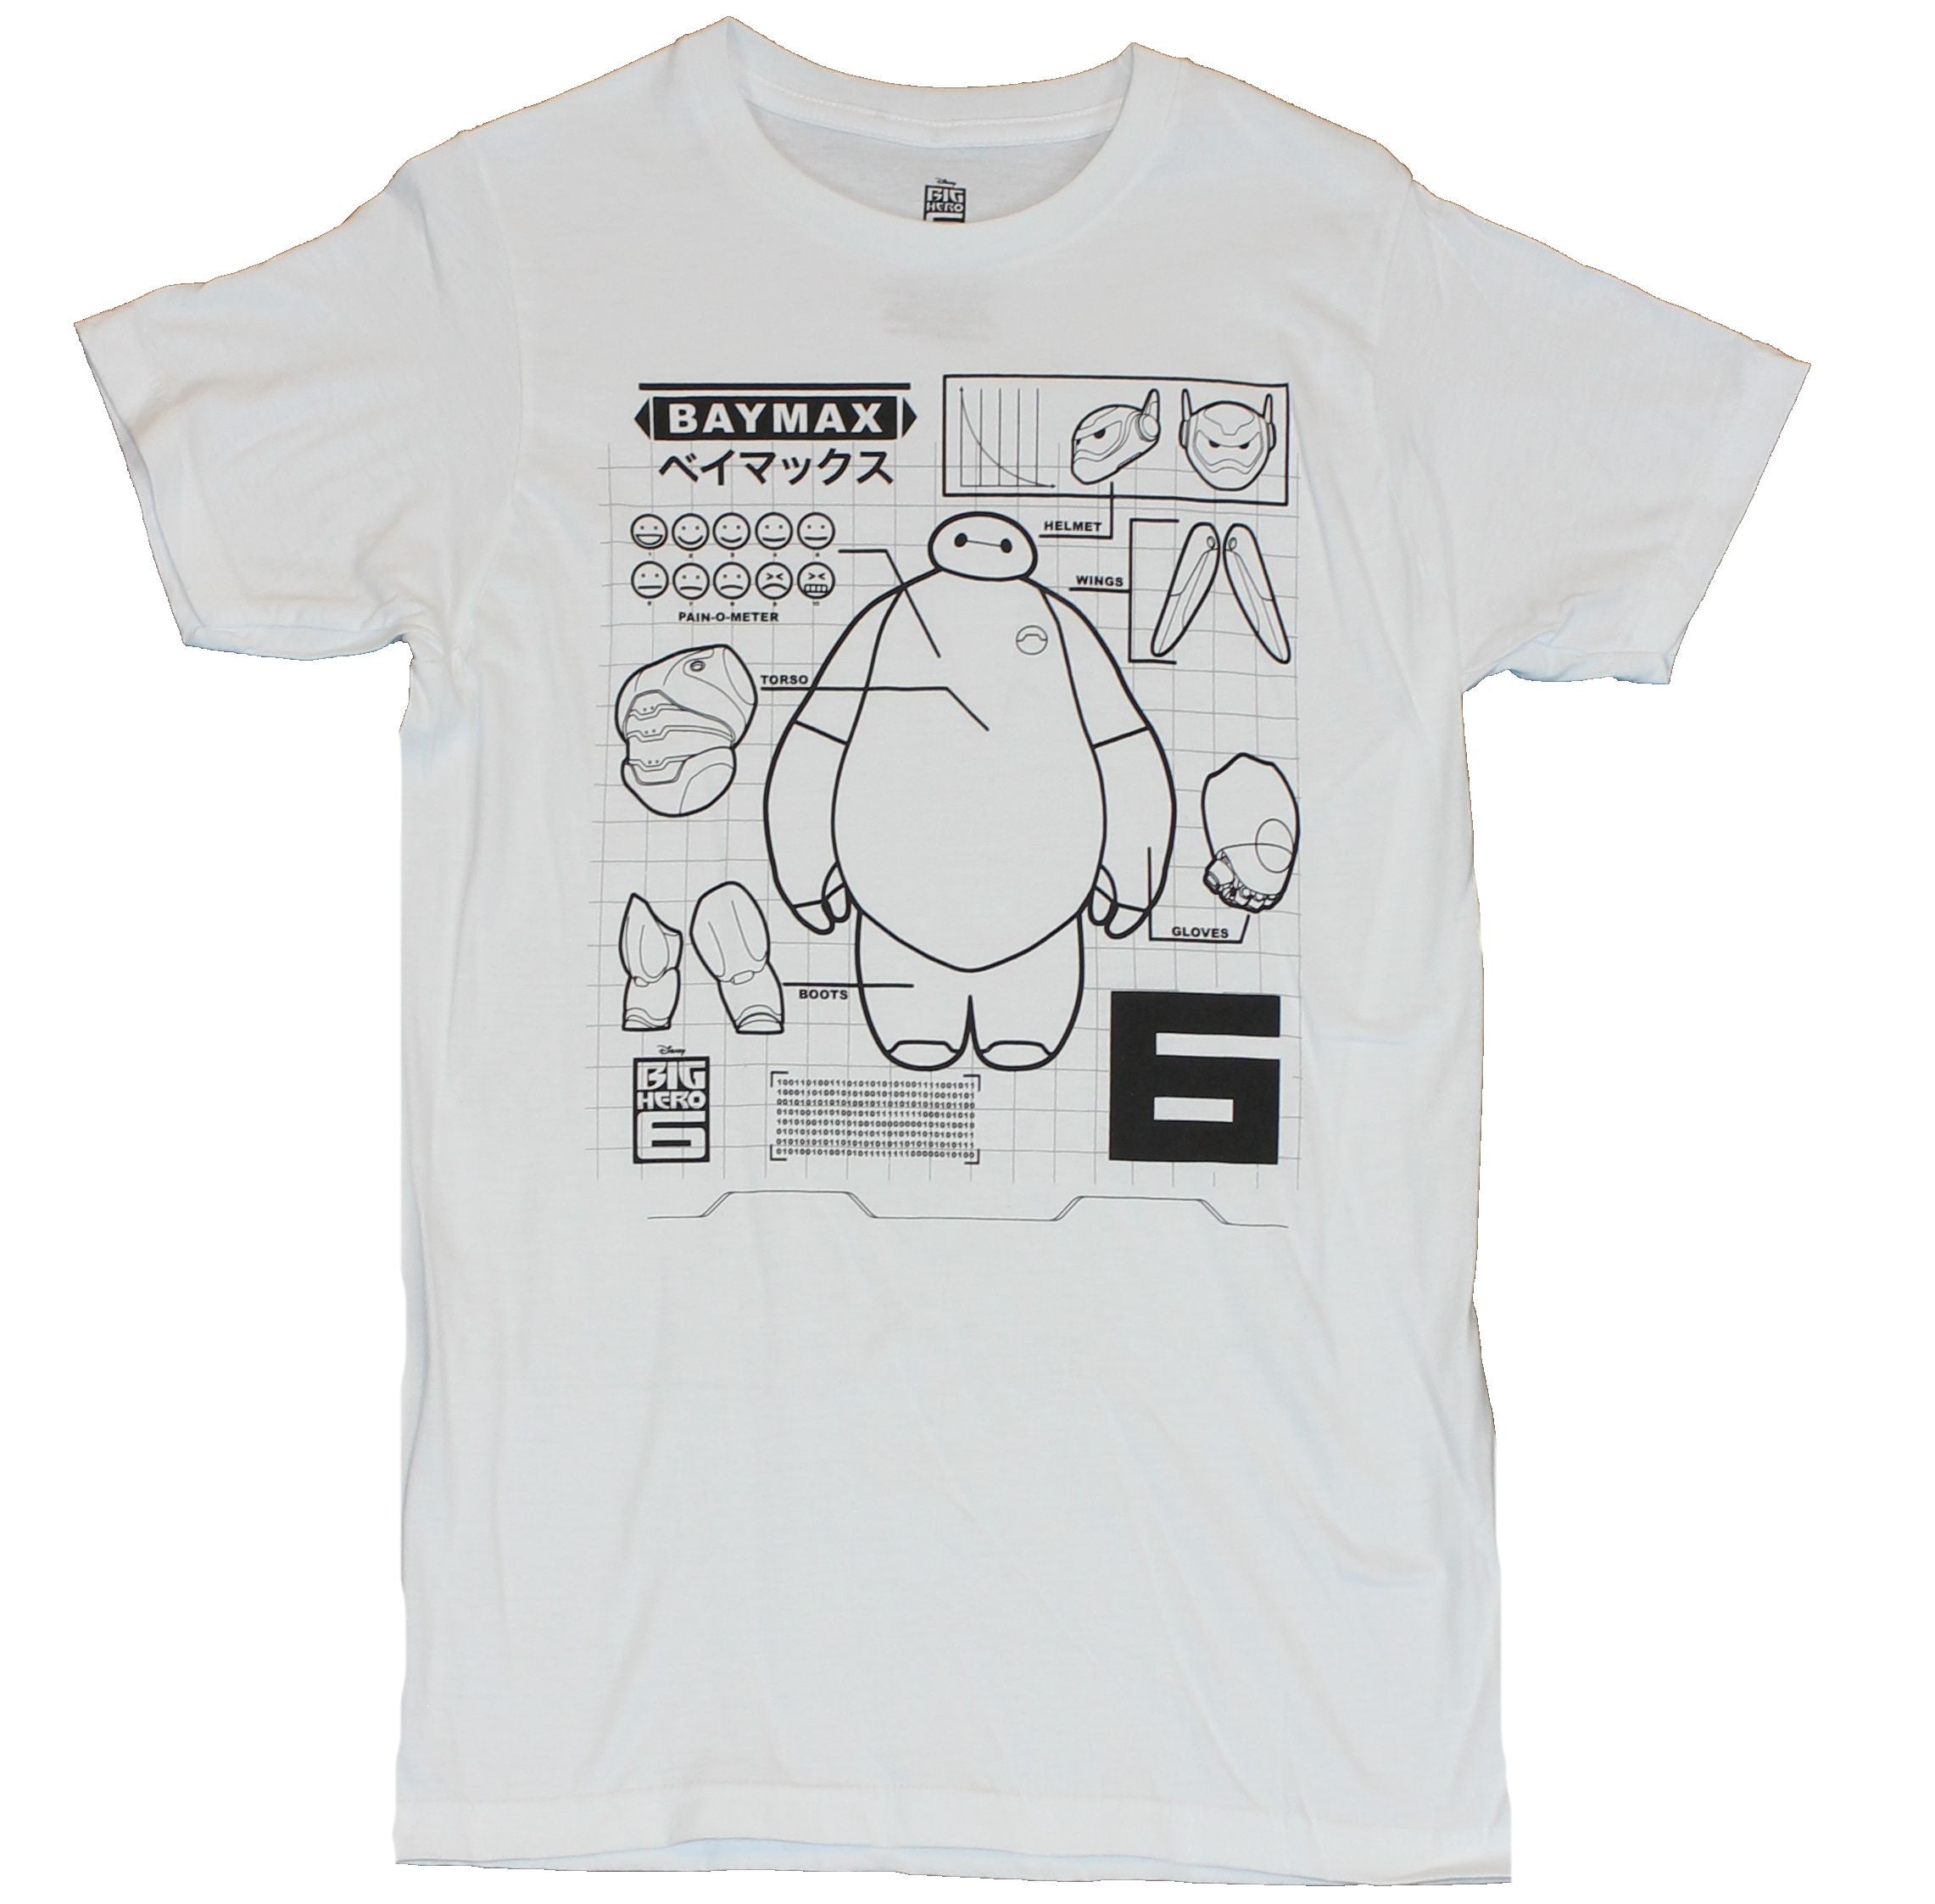 Big Hero Six 6 Mens T-Shirt - Baymax Black and White Blue Print Image